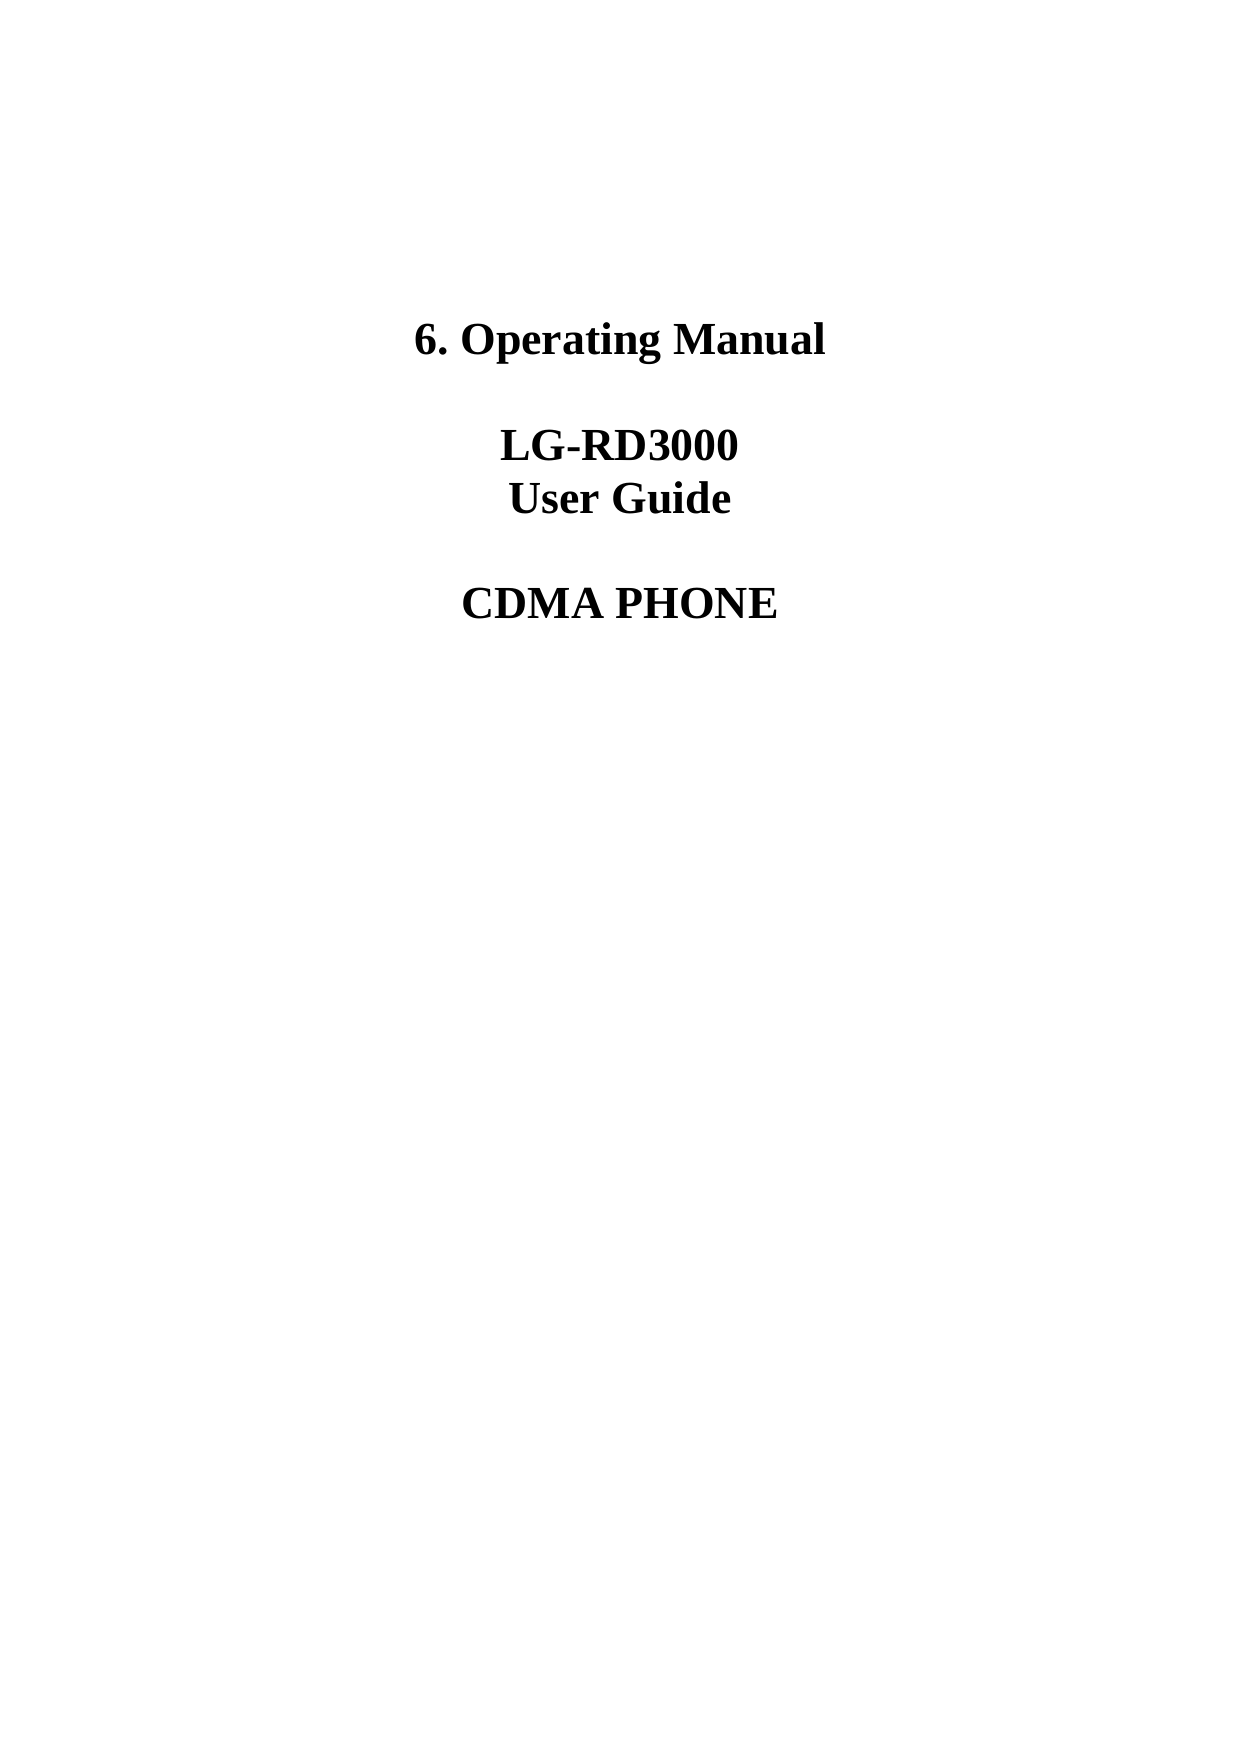   6. Operating Manual  LG-RD3000 User Guide  CDMA PHONE                          